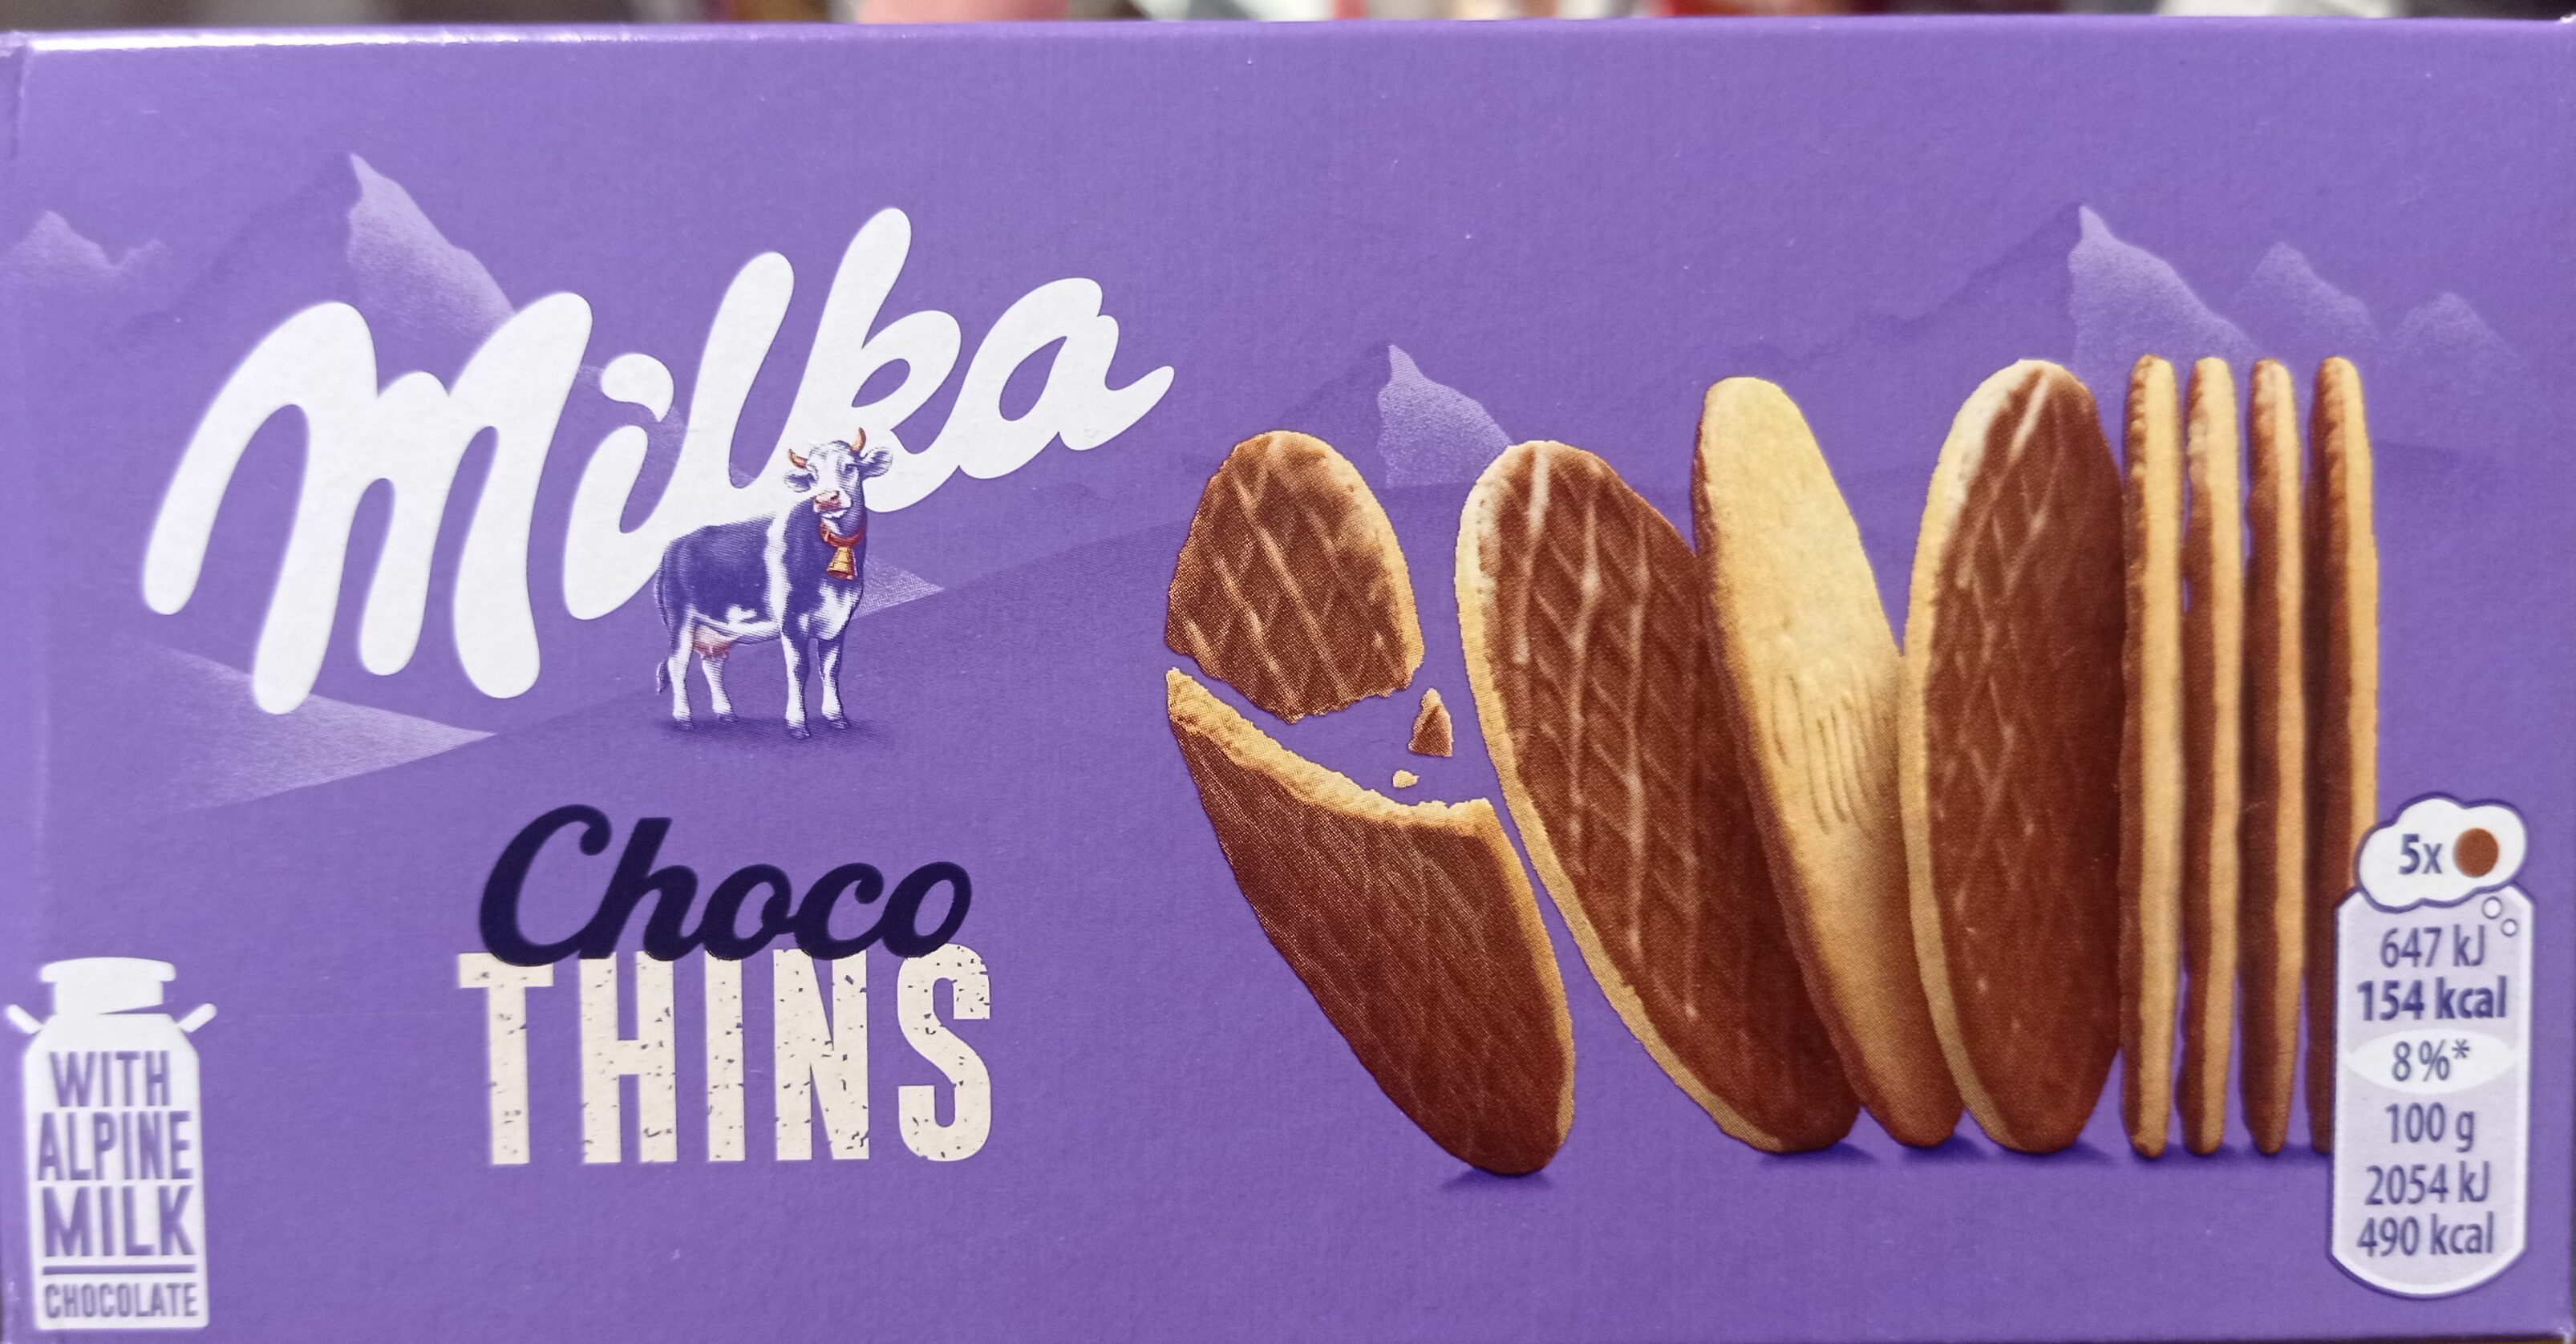 Choco thins - Produkt